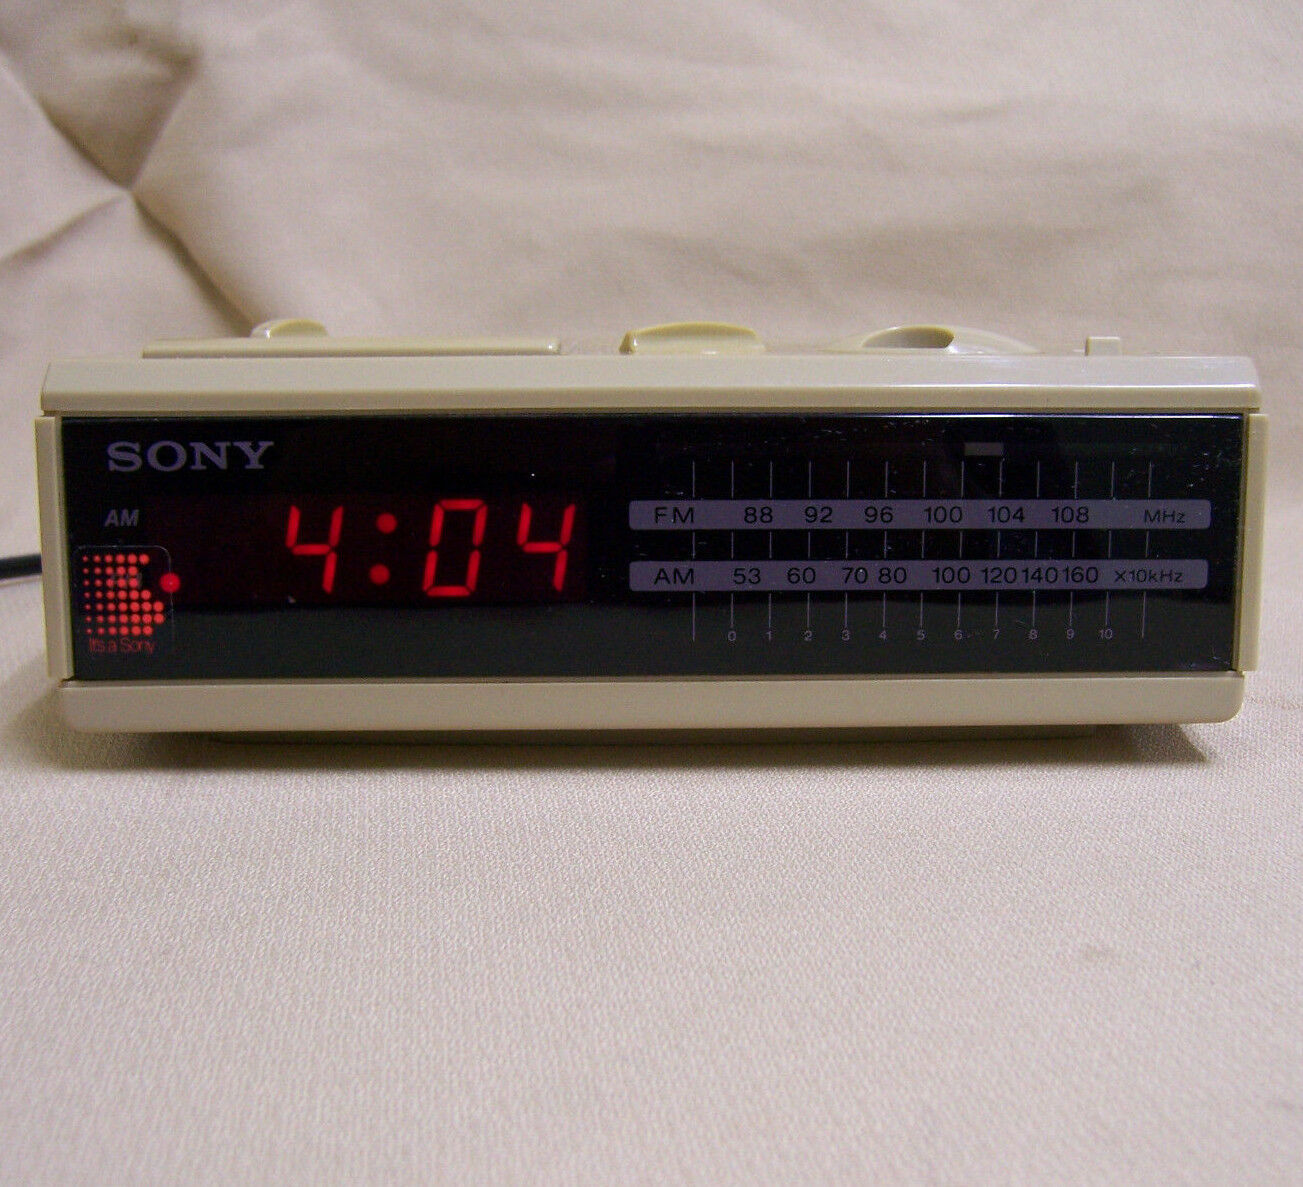 Sony Dream Machine ICF-C2W Alarm AM/FM Red LED Clock Radio Almond ivory off whit - $21.78